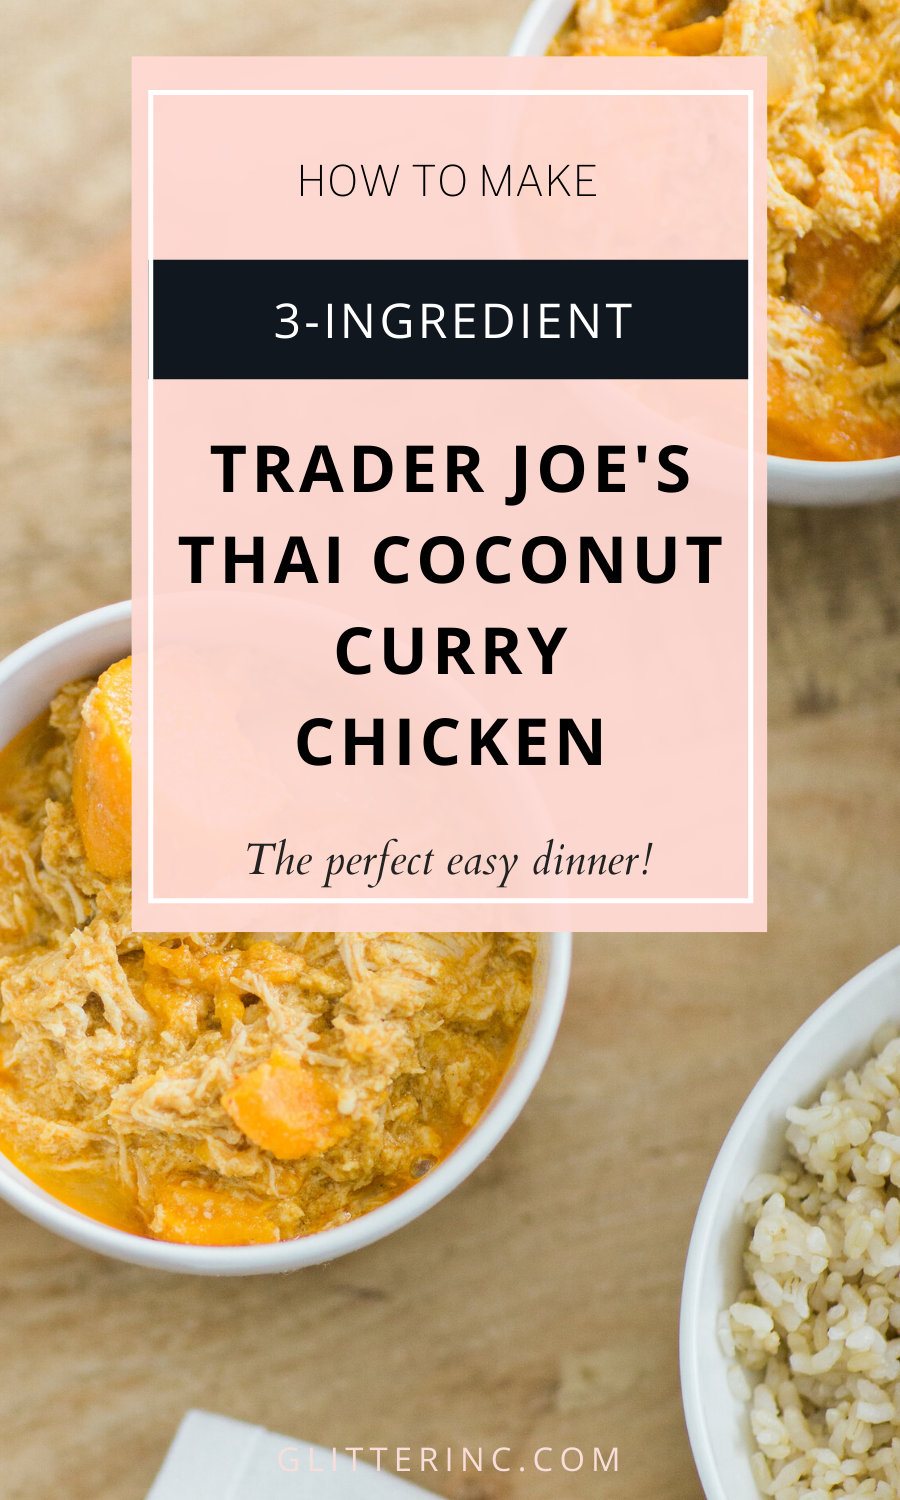 Our favorite 3-Ingredient Trader Joe's Thai Coconut Curry Chicken. Click through for the EASY recipe. #easydinner #traderjoesdinner #traderjoes #slowcooker #crockpot #instantpot | glitterinc.com | @glitterinc